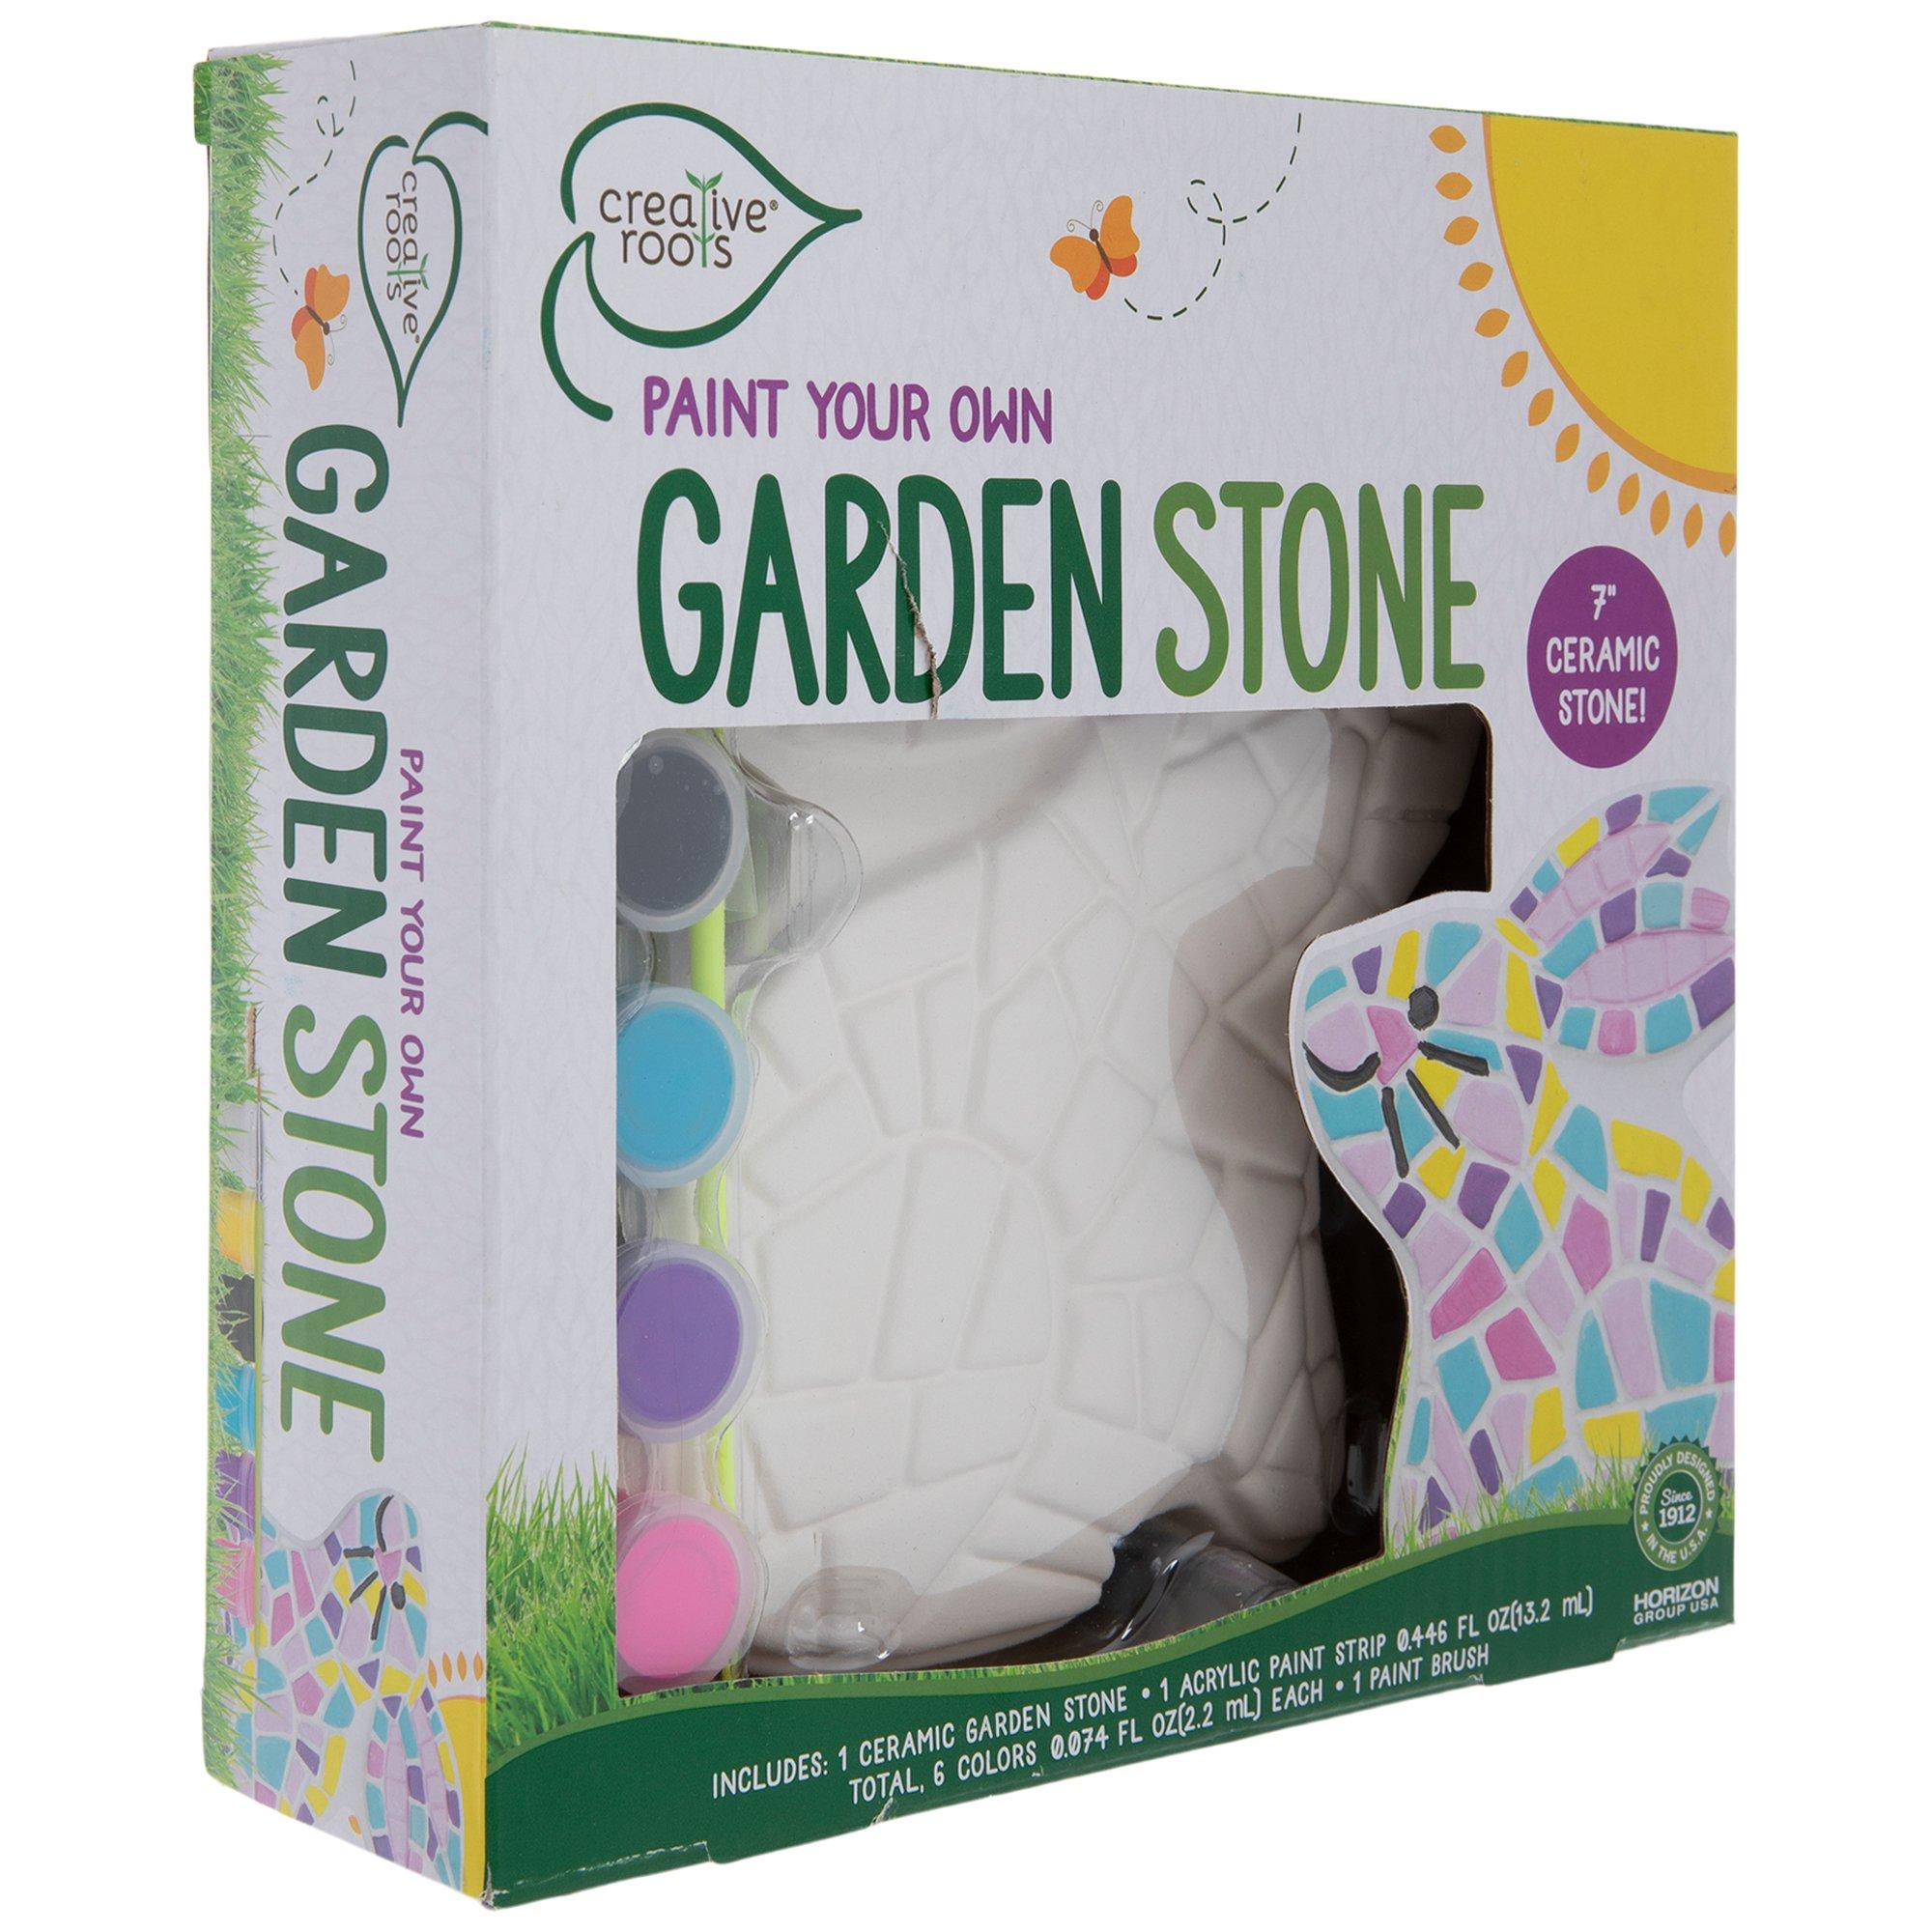 House Creativity My World Stepping Stone Garden Kit - Shop Kits at H-E-B